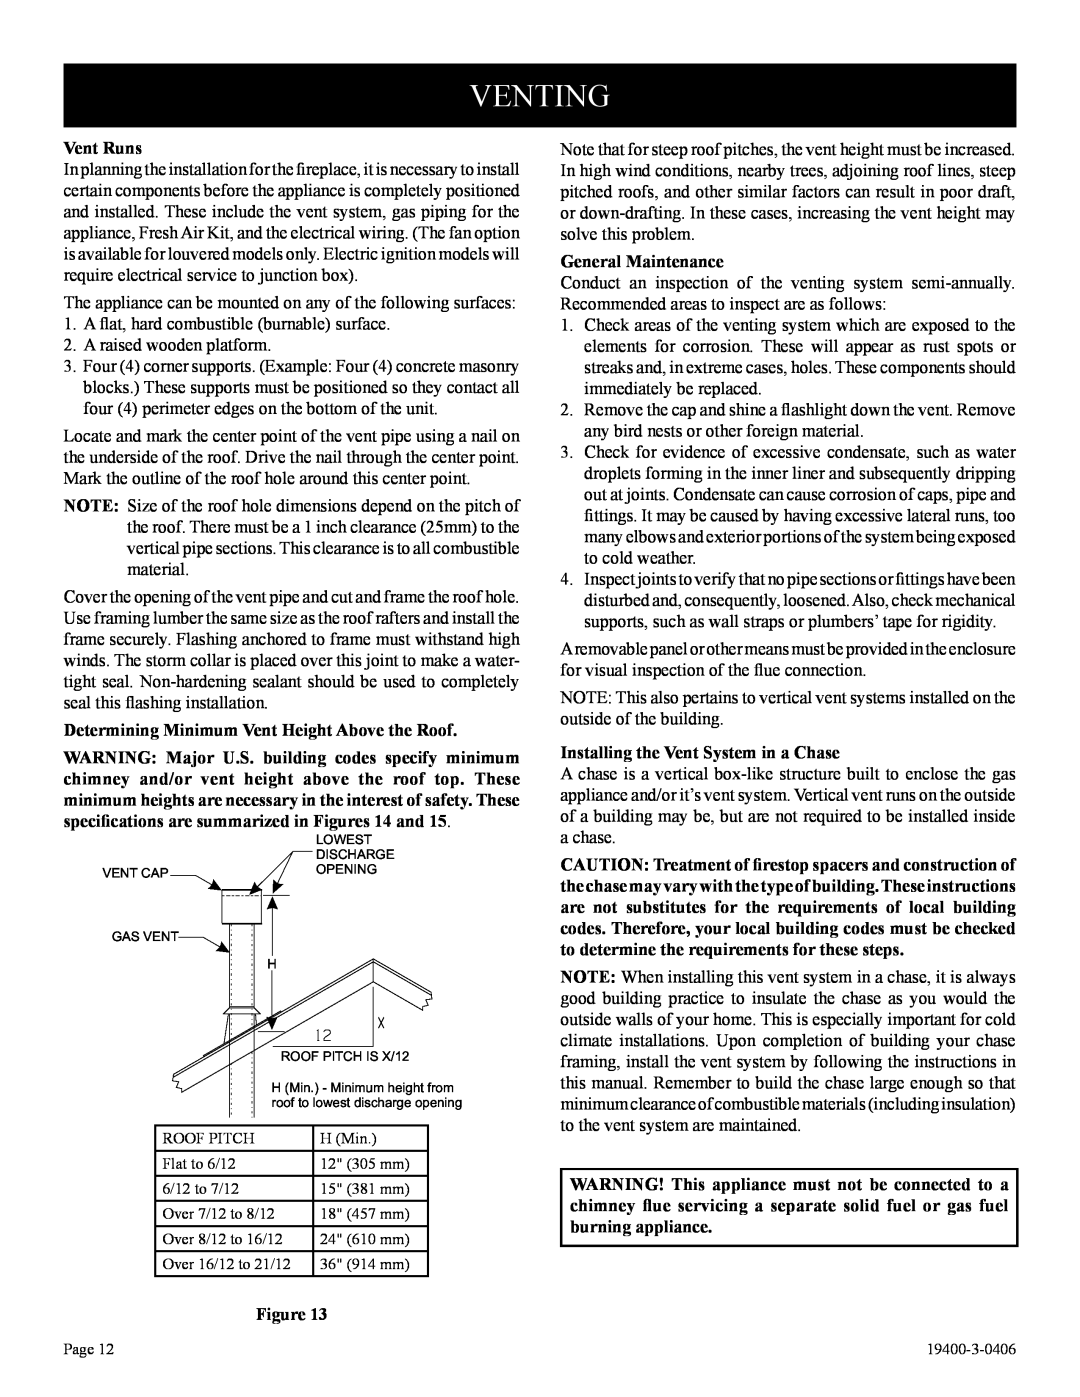 Vulcan-Hart BVP42FP52(F,L)N-1 Venting, Vent Runs, Determining Minimum Vent Height Above the Roof, General Maintenance 